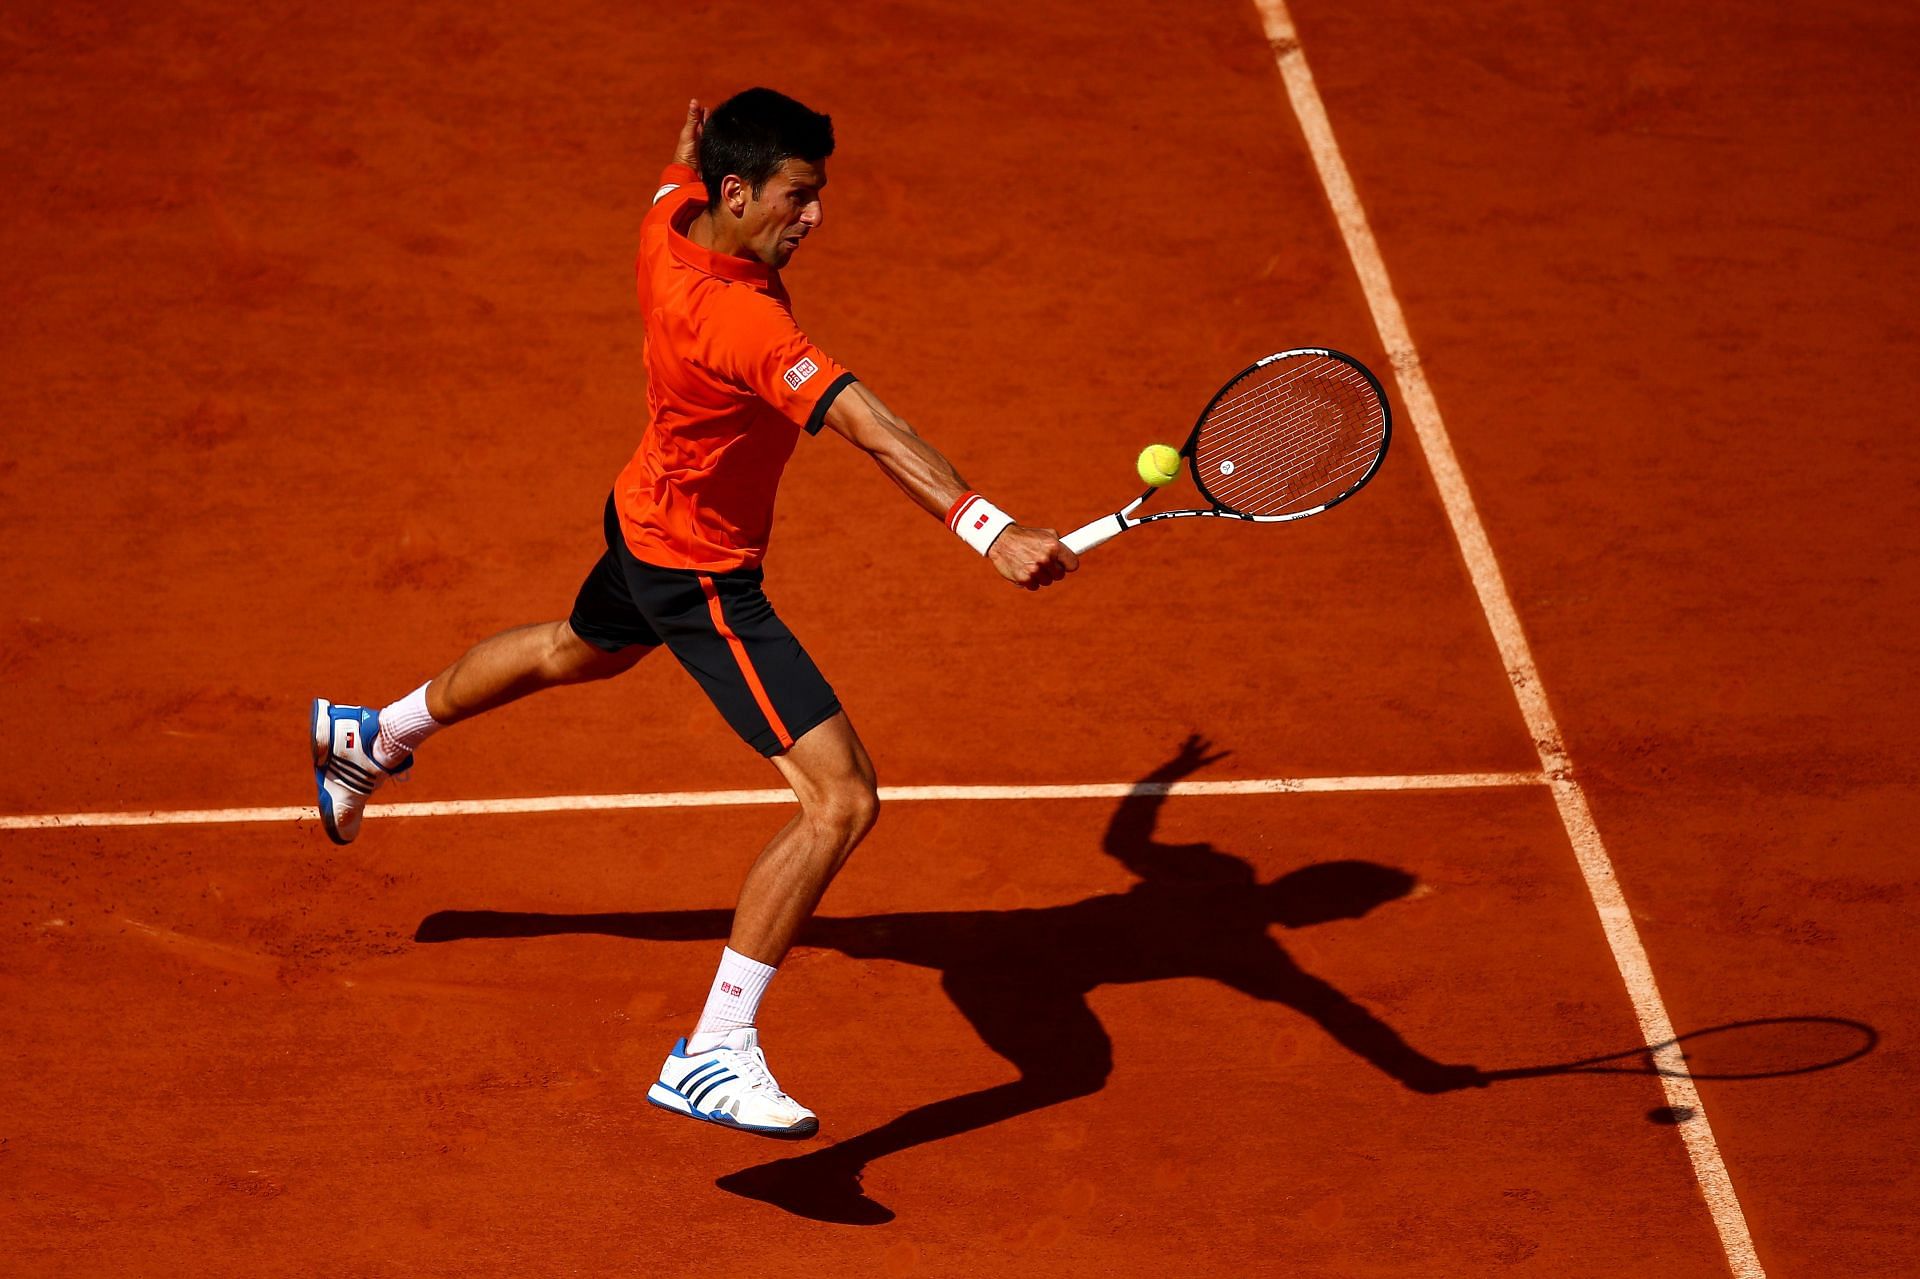 2015 Roland Garros - Novak Djokovic beat Rafael Nadal